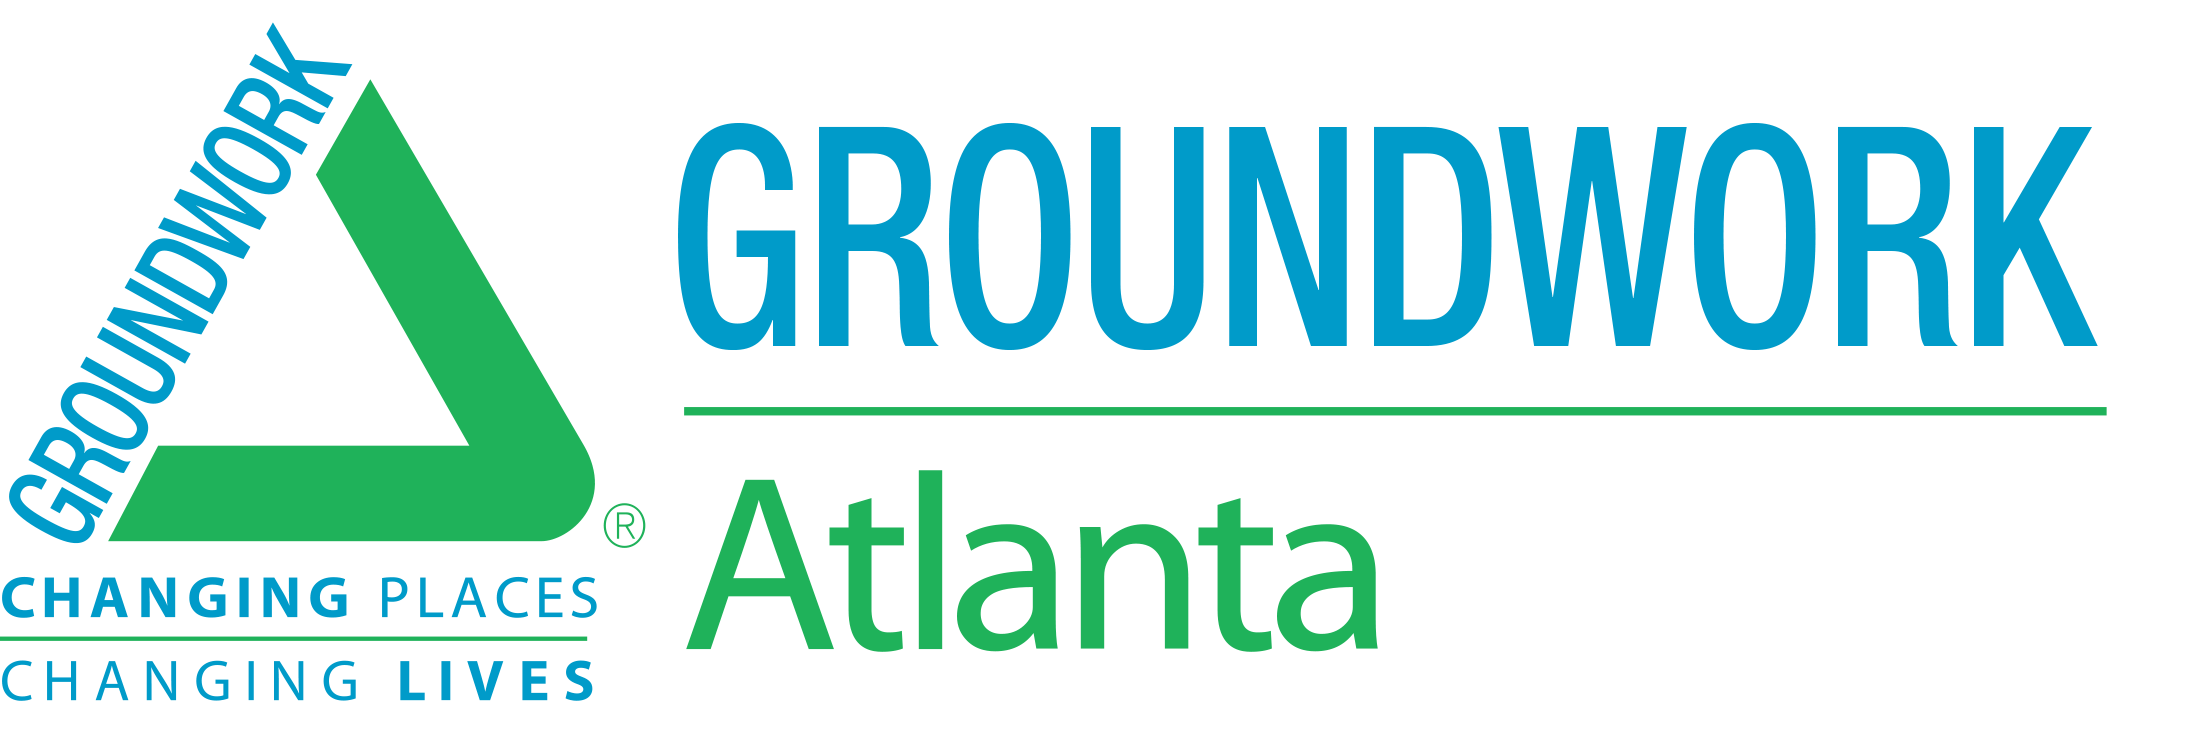 Groundwork Atlanta logo